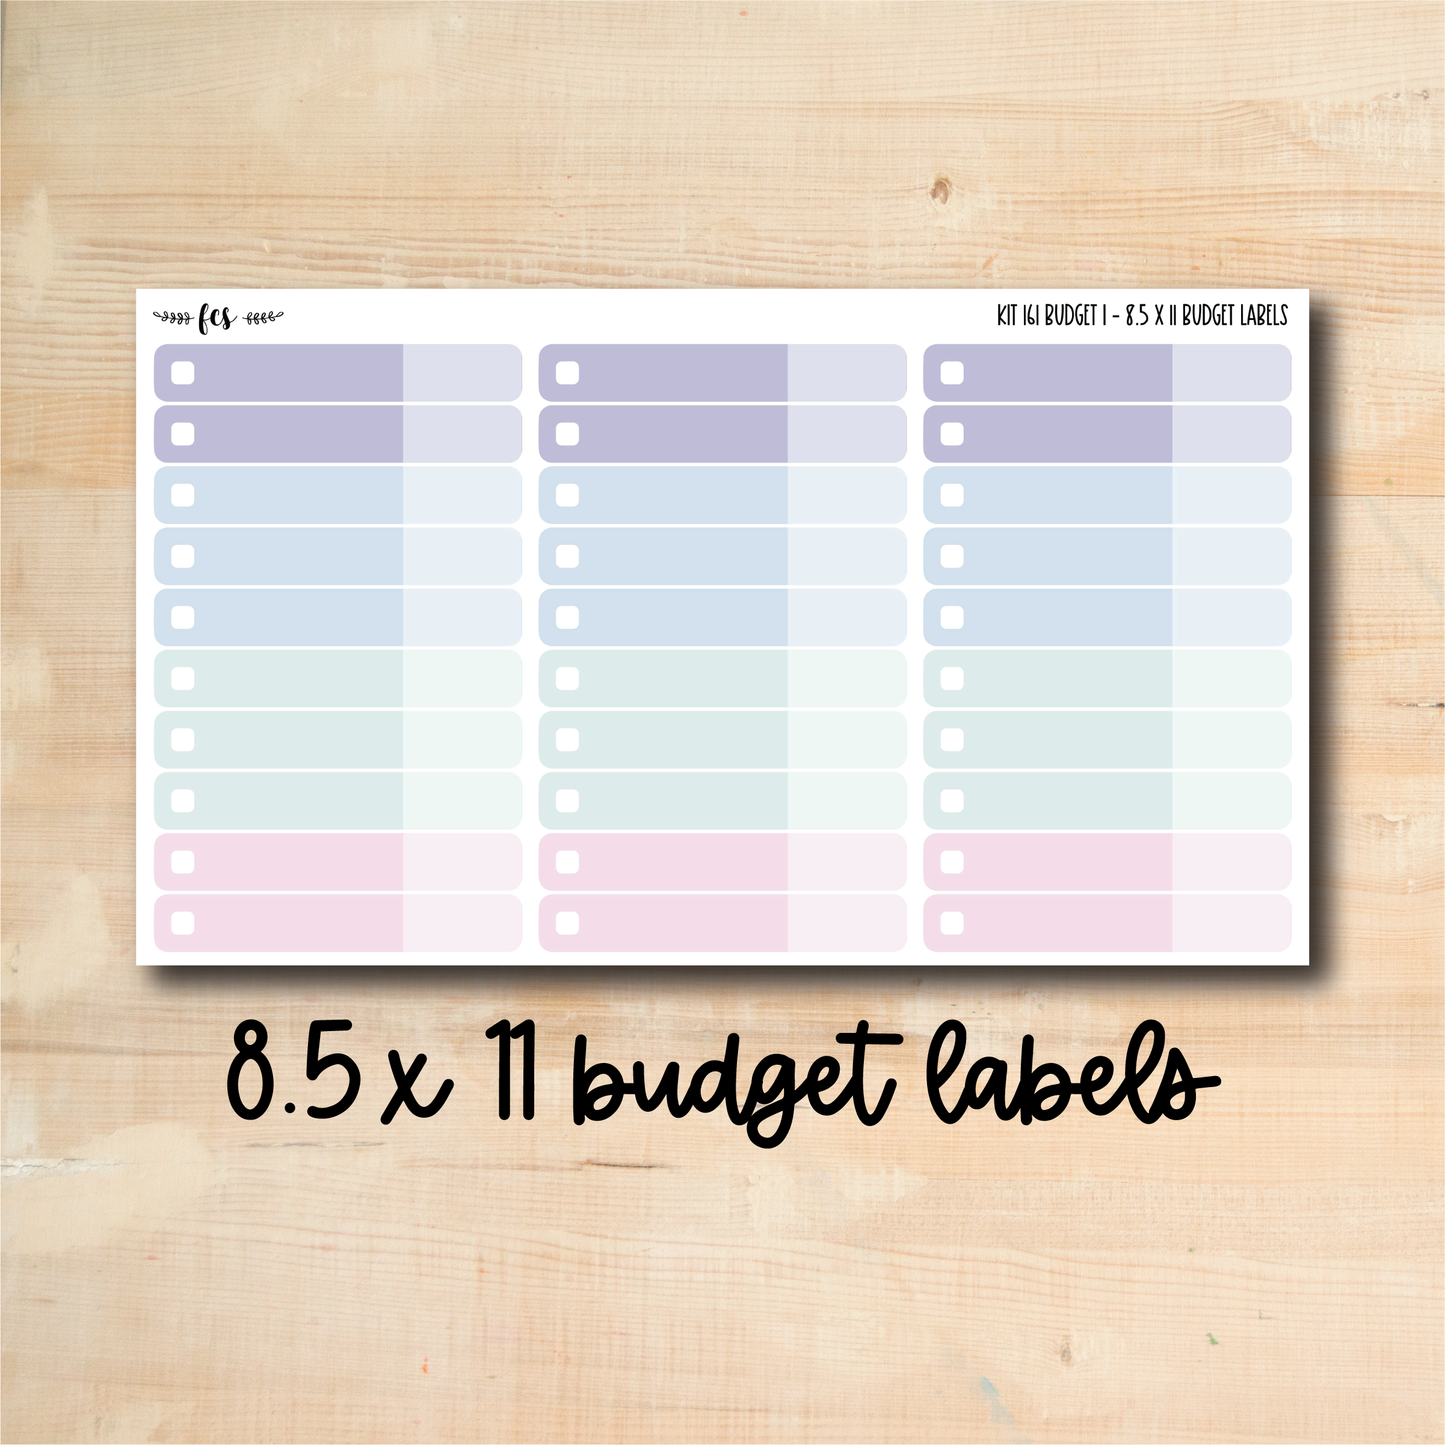 BUDGET-161 || COTTAGE GARDEN 8.5x11 budget labels